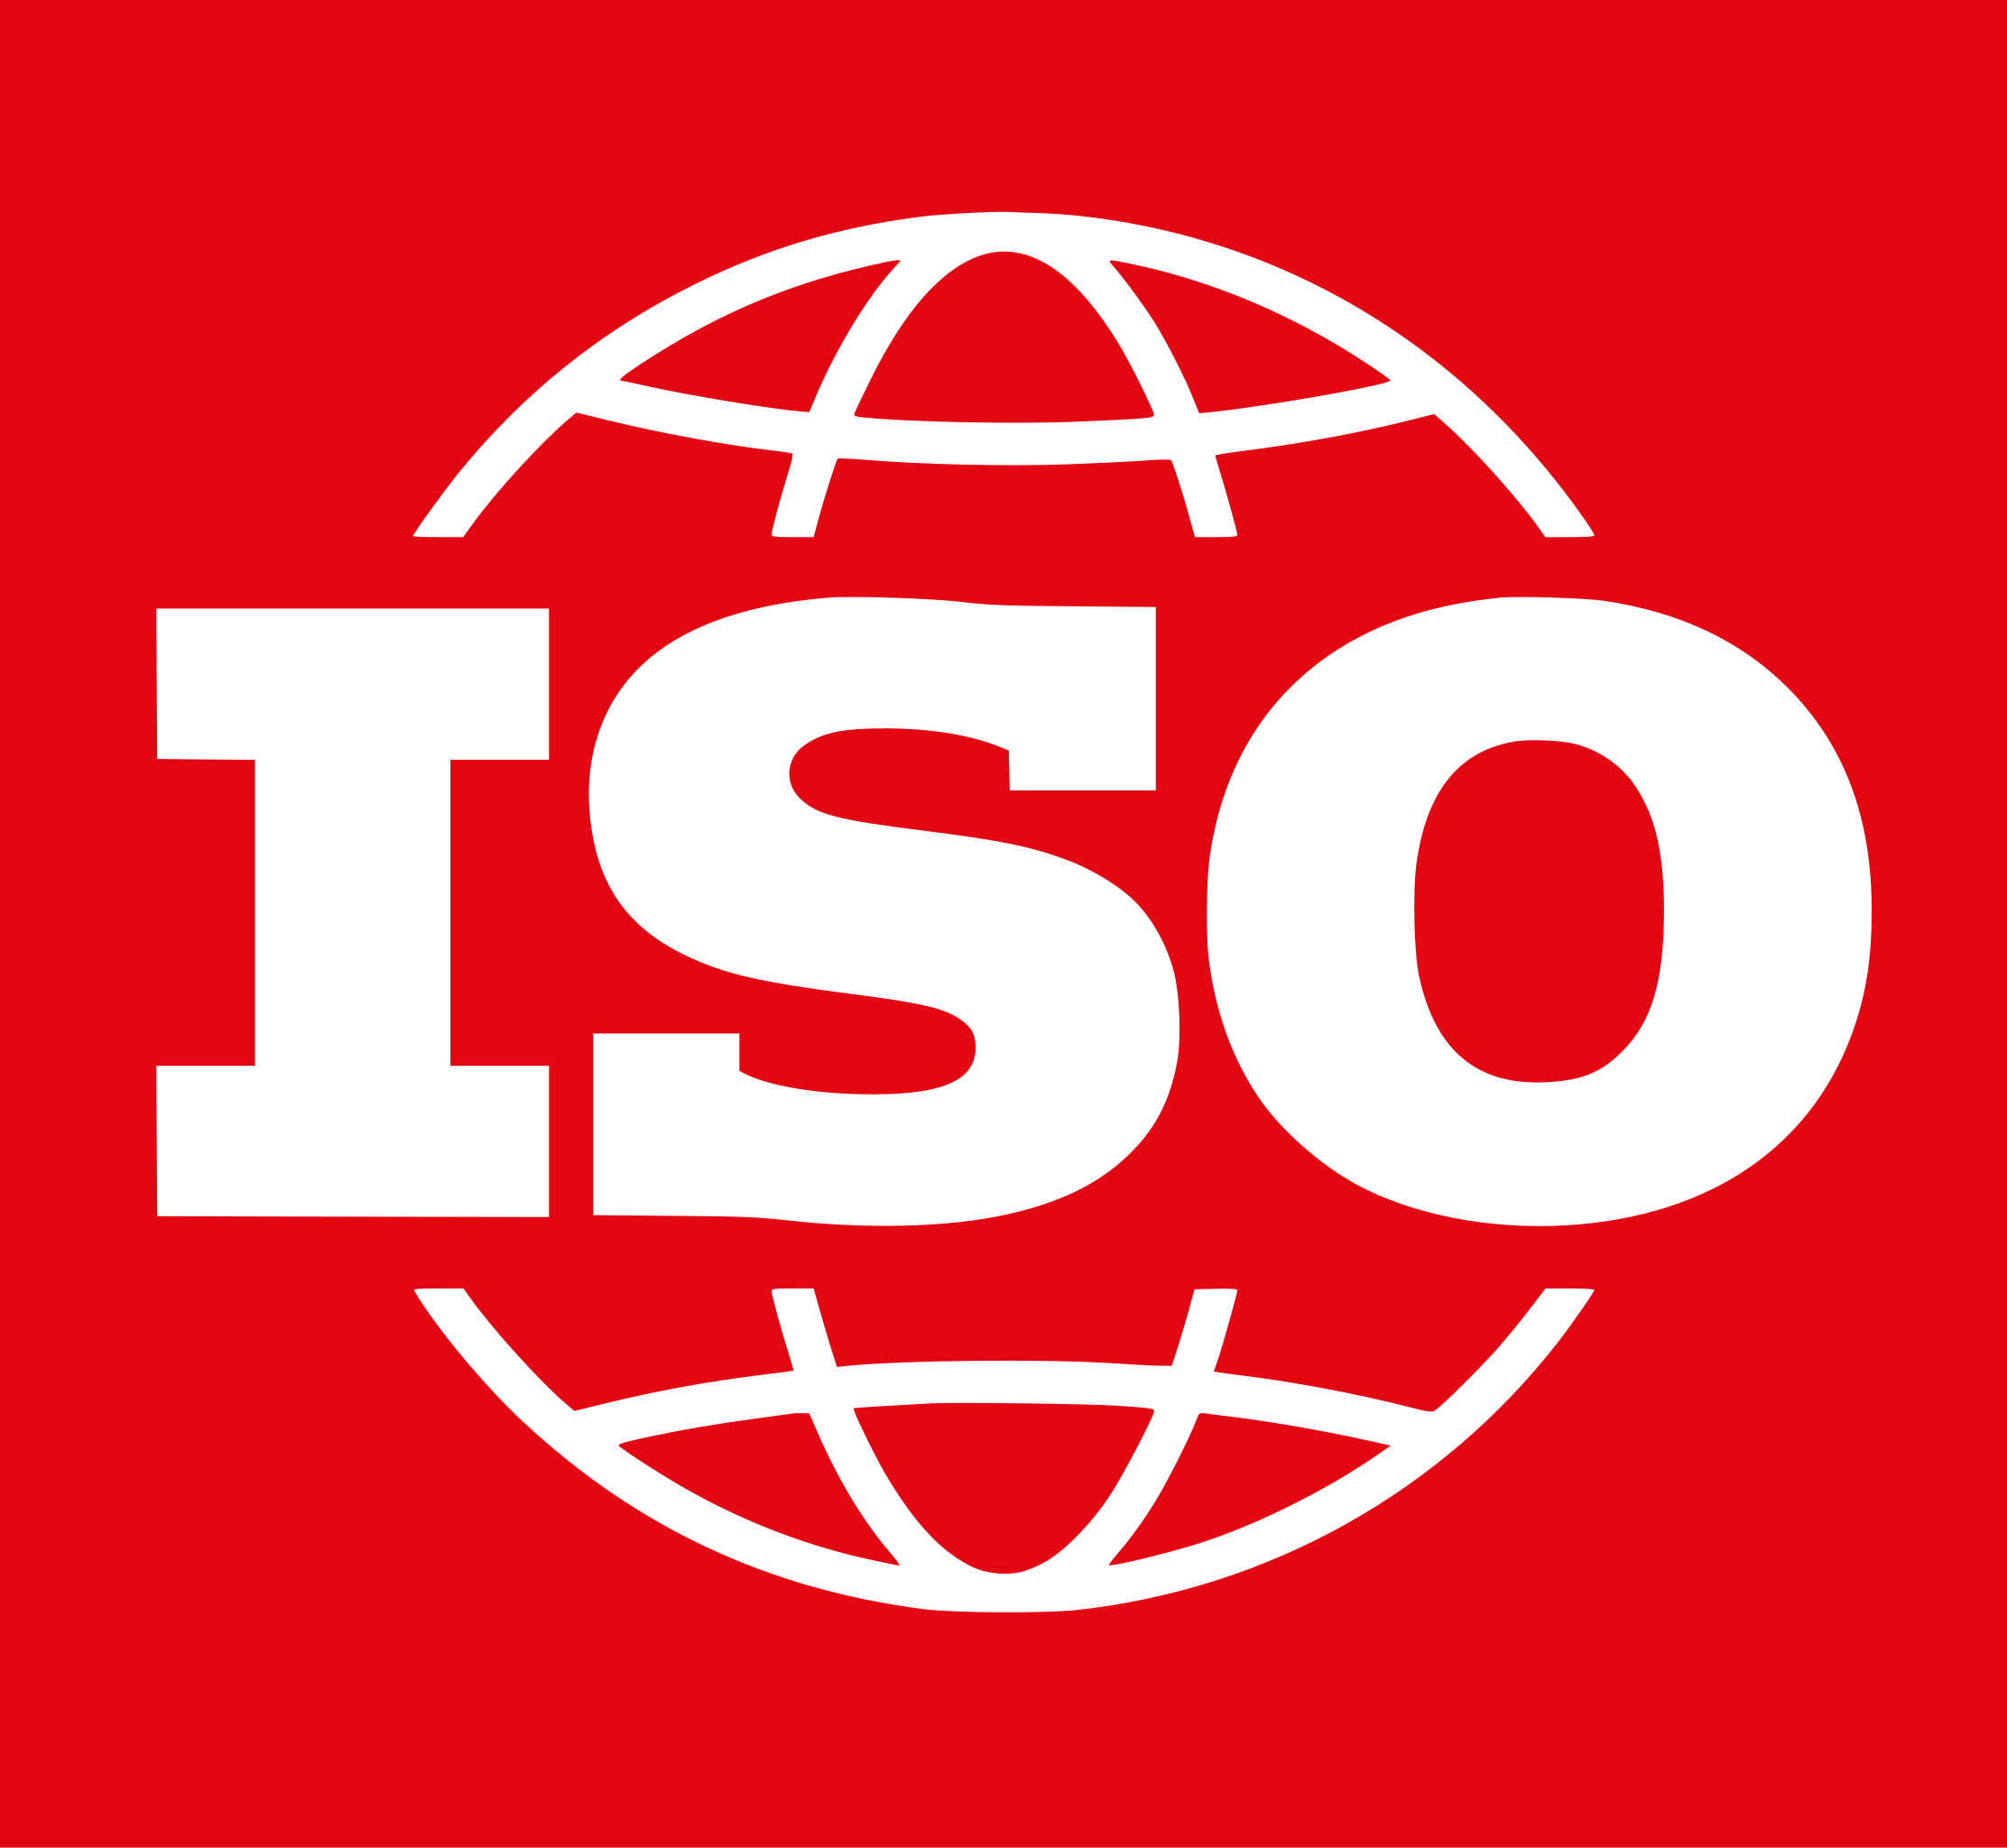 Heatsense Working Towards ISO 17025 Certification for Testing & Calibration Laboratories